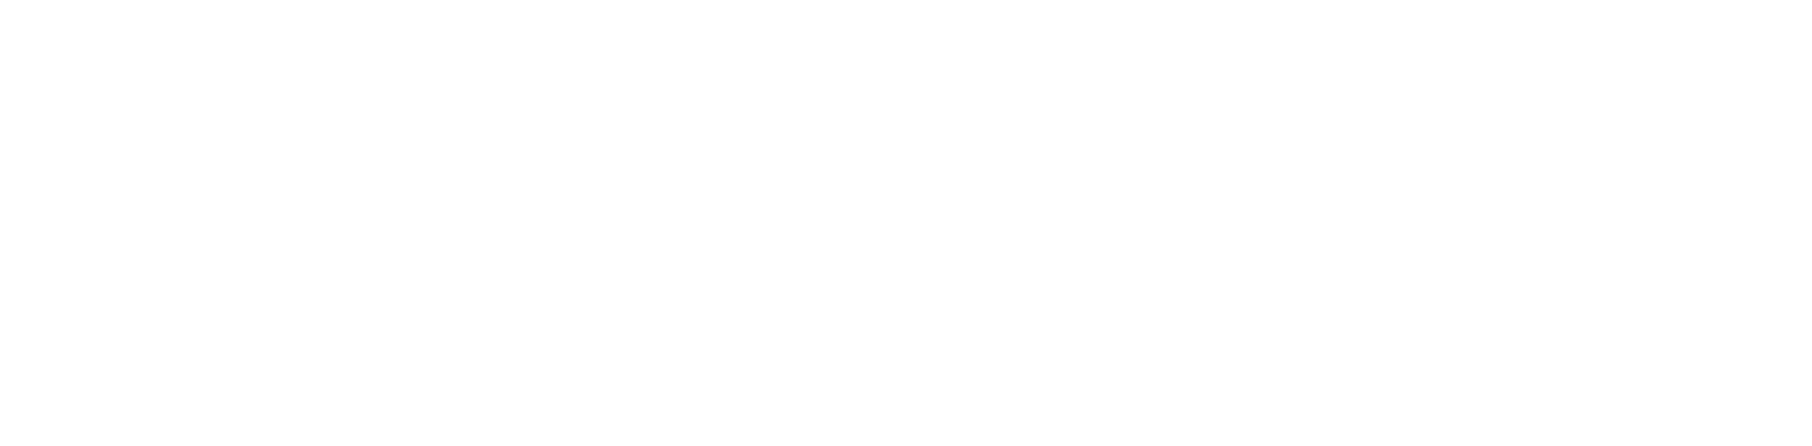 The Great Northern Railway Tavern